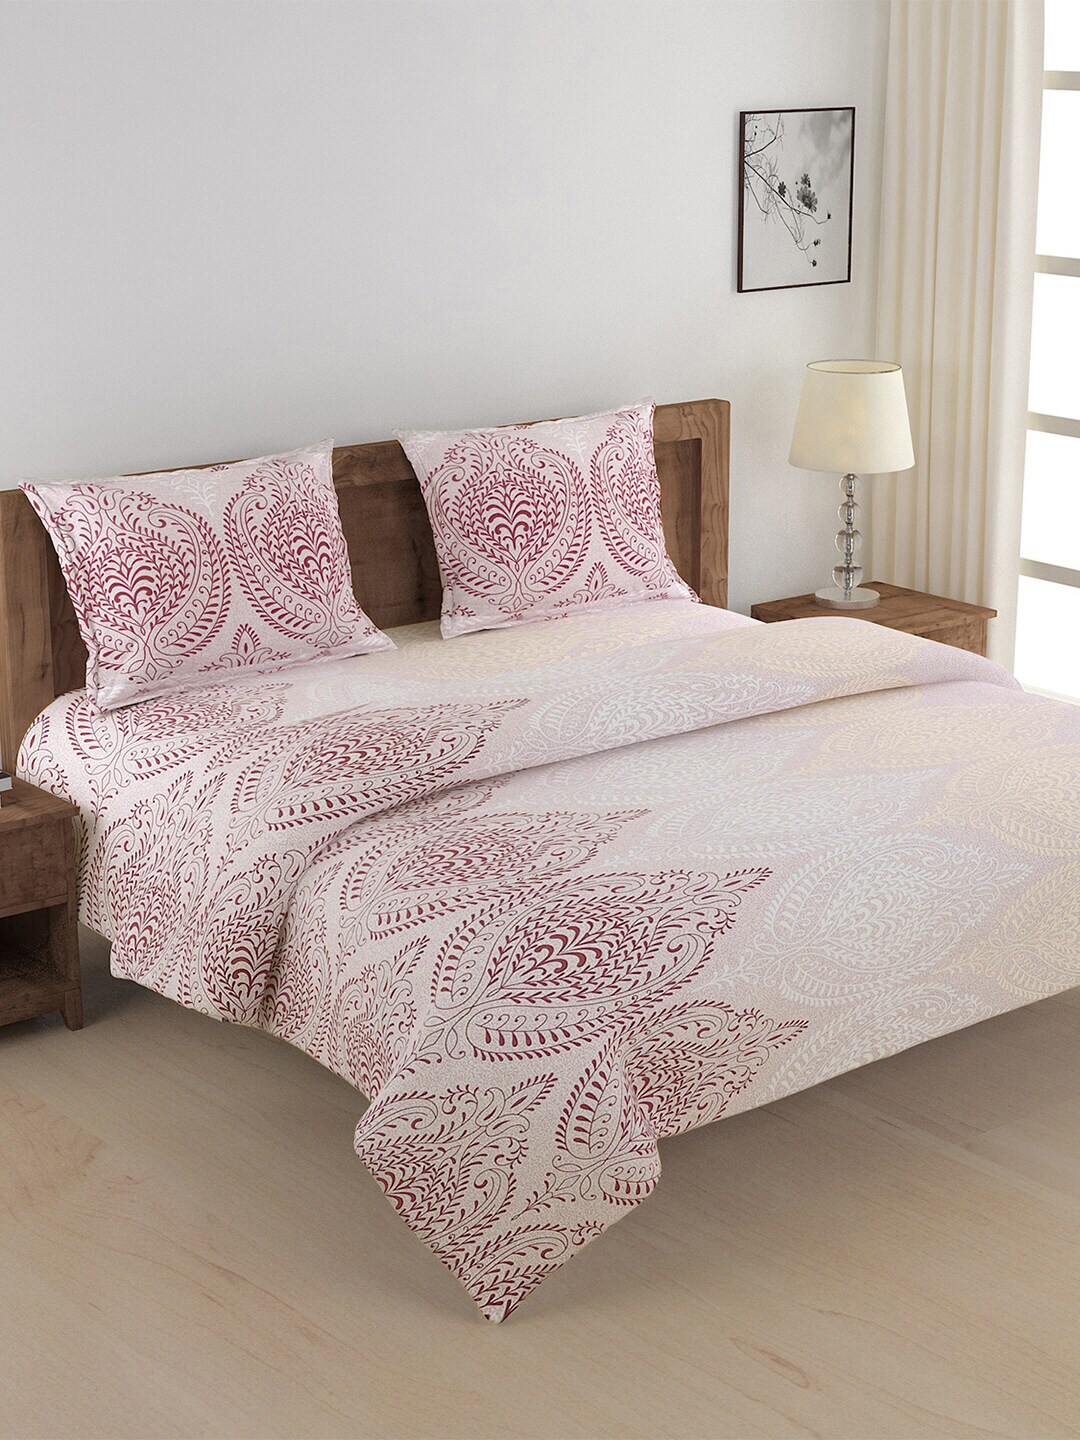 SWAYAM Pink & White Printed Cotton Double King Bedding Set Price in India